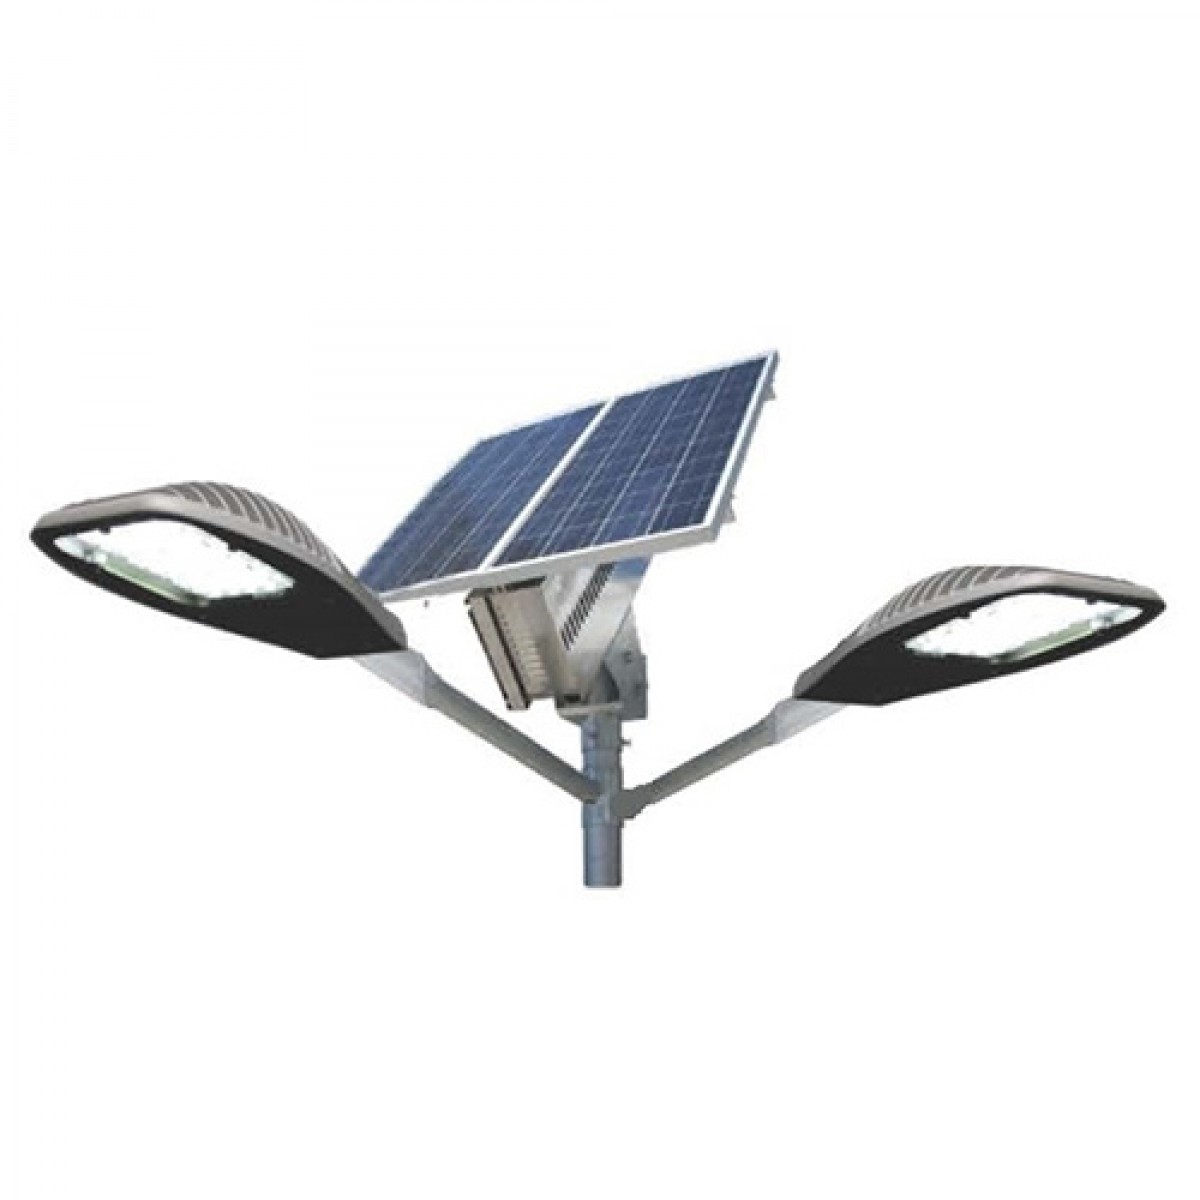 SOLAR DOUBLE CONSOLE STREET LAMP 100W